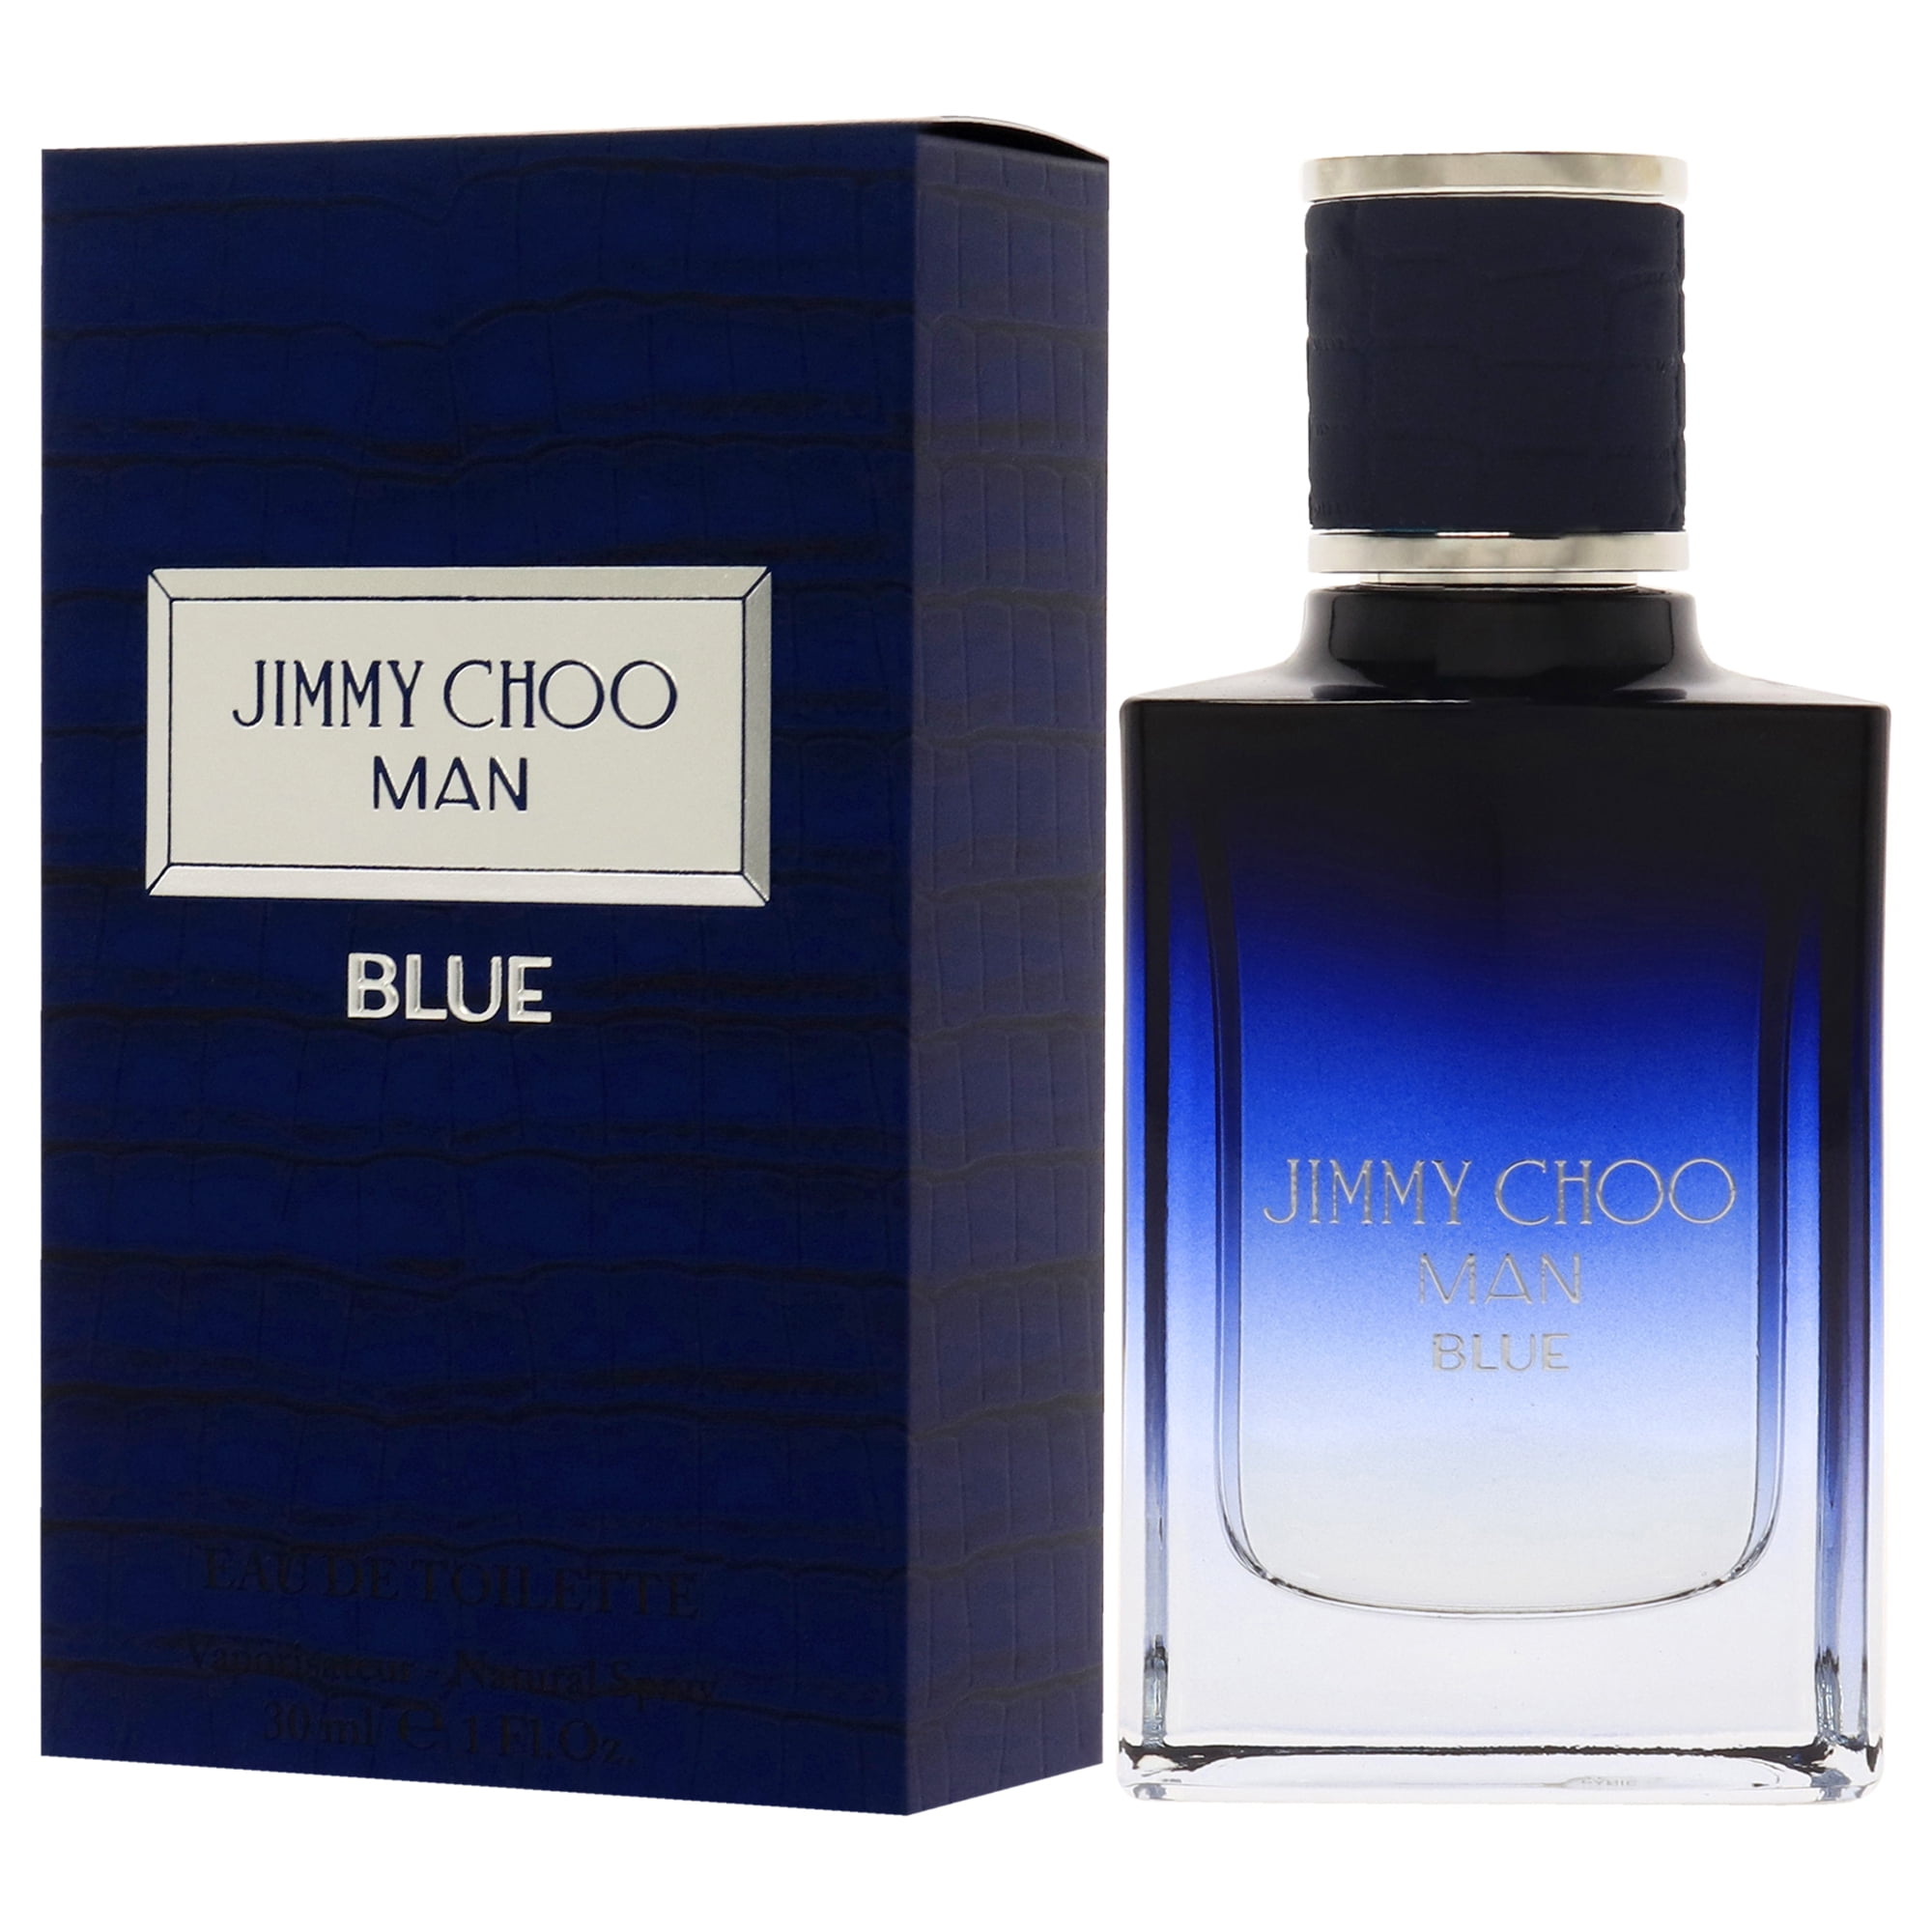 Buy Jimmy Choo Man Blue EDT for Men Perfume Online at Best Price - Belvish